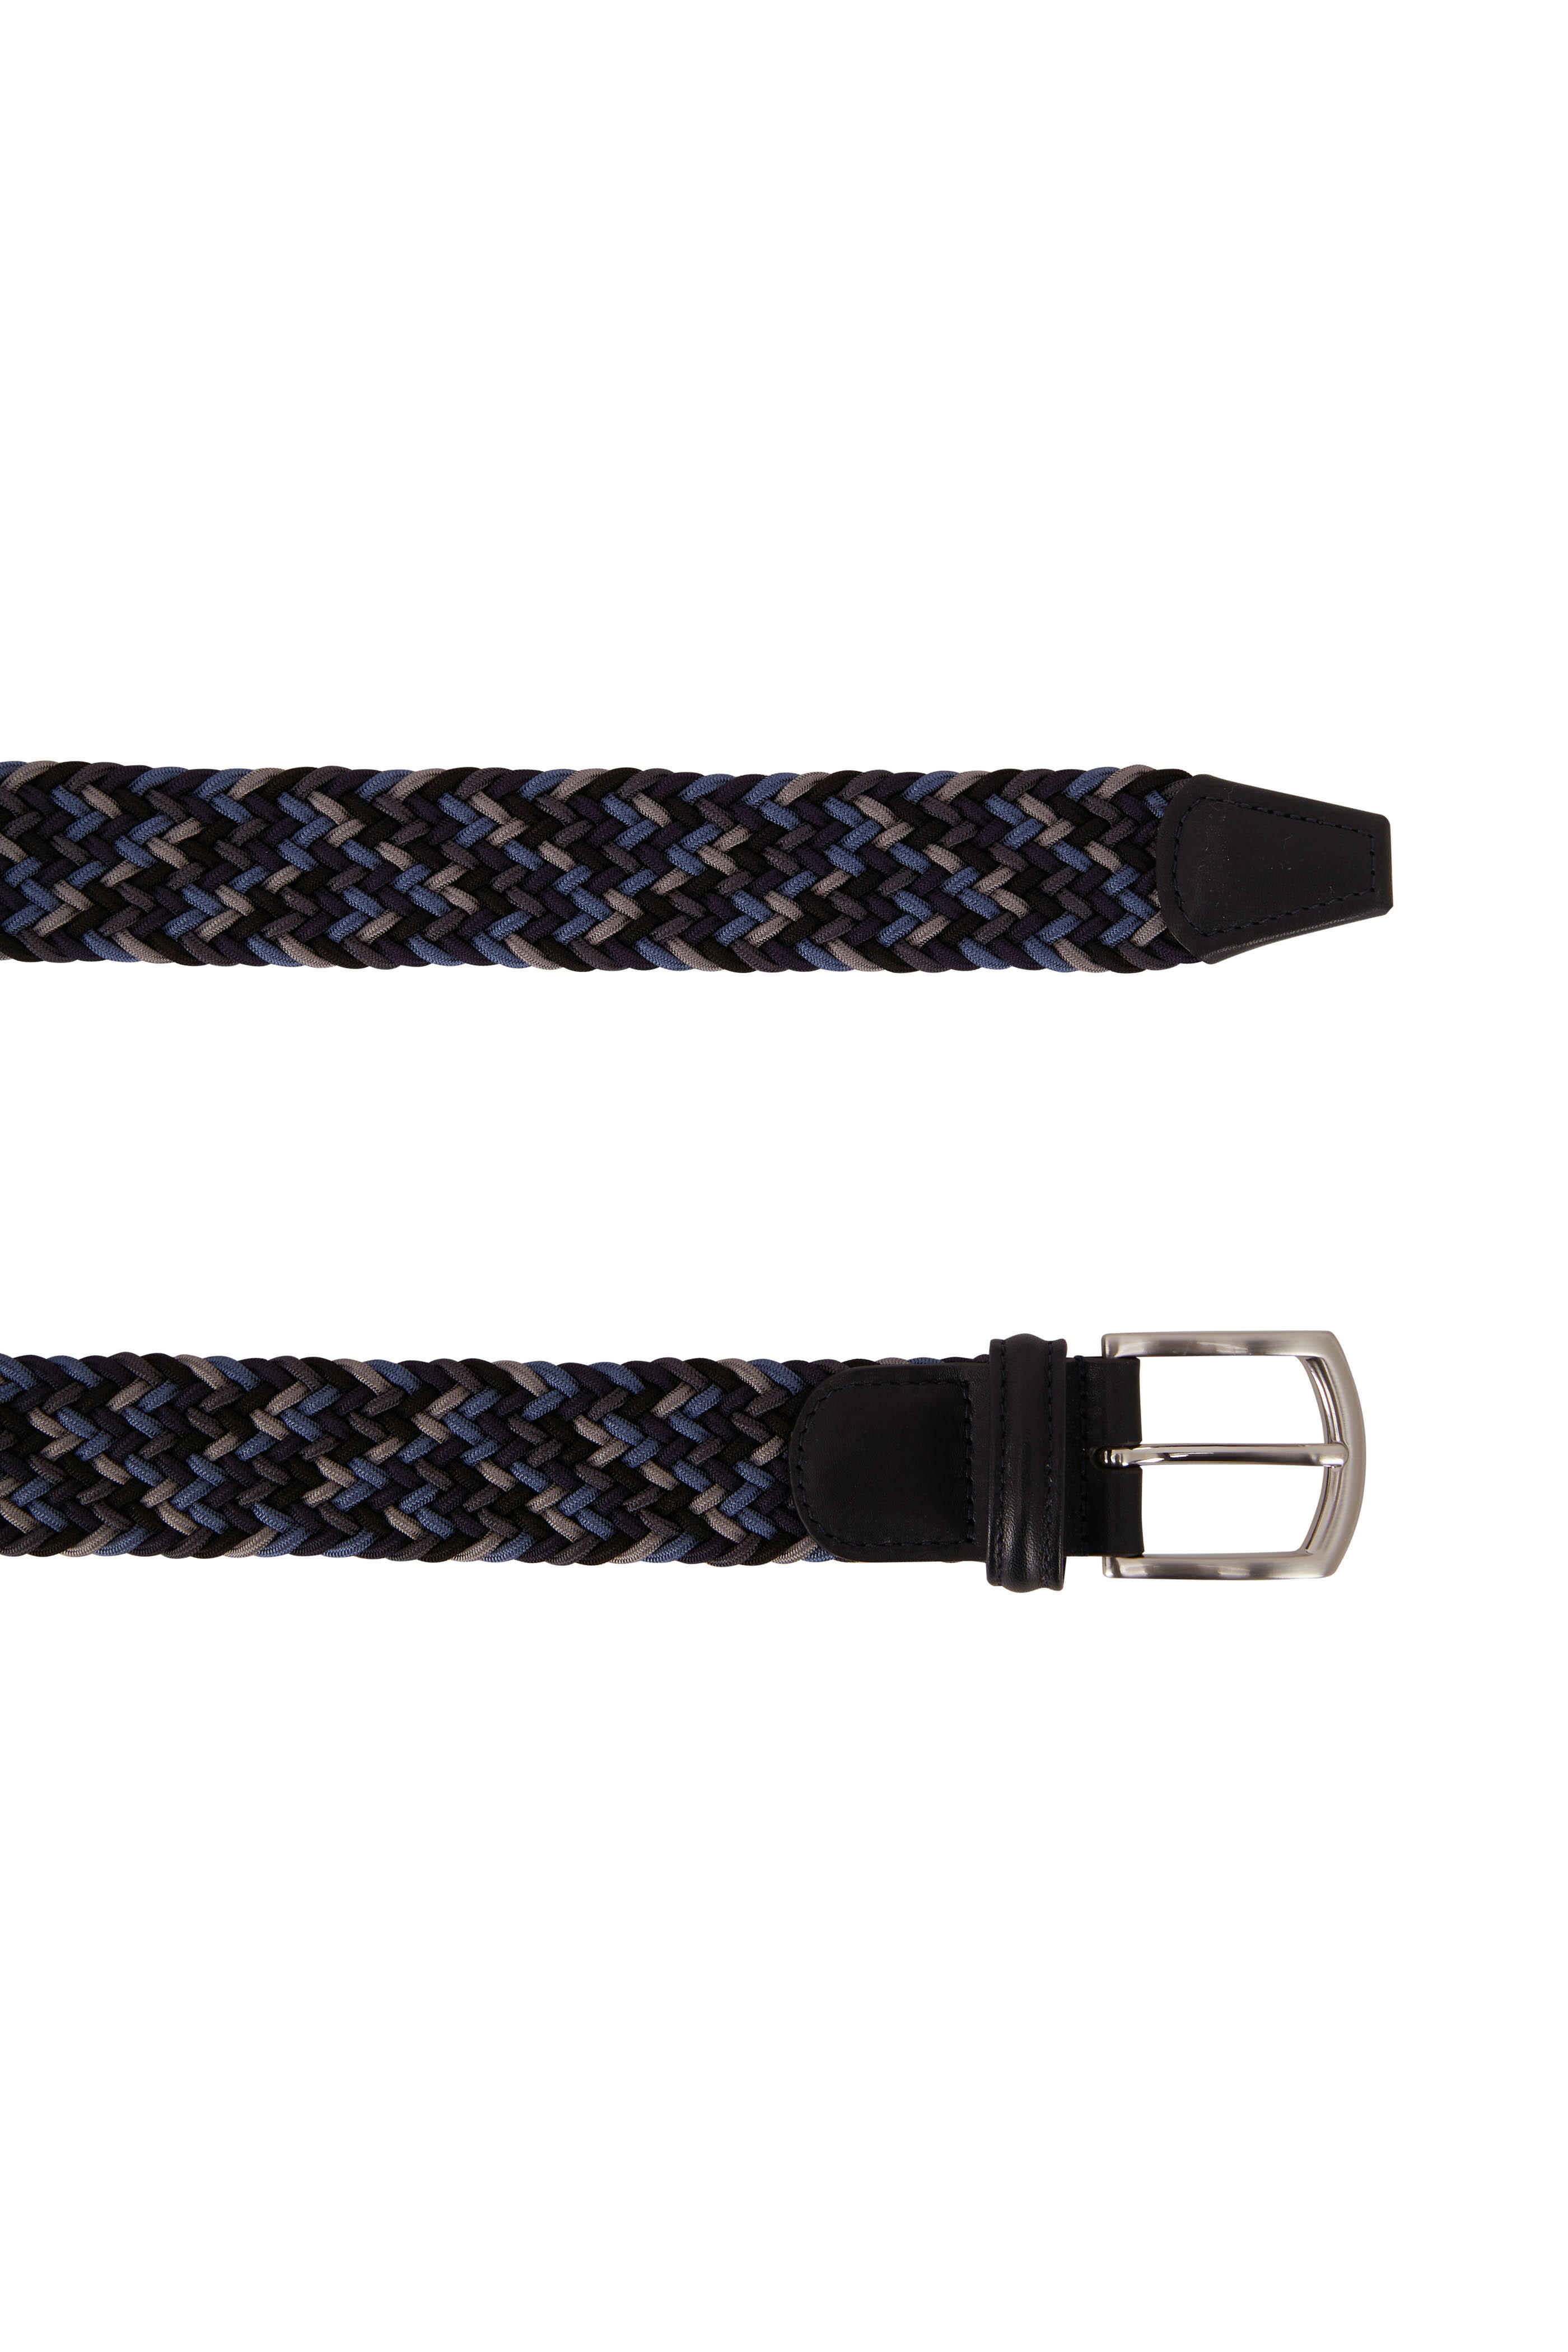 Anderson's Belts Woven Elastic Belt - Khaki